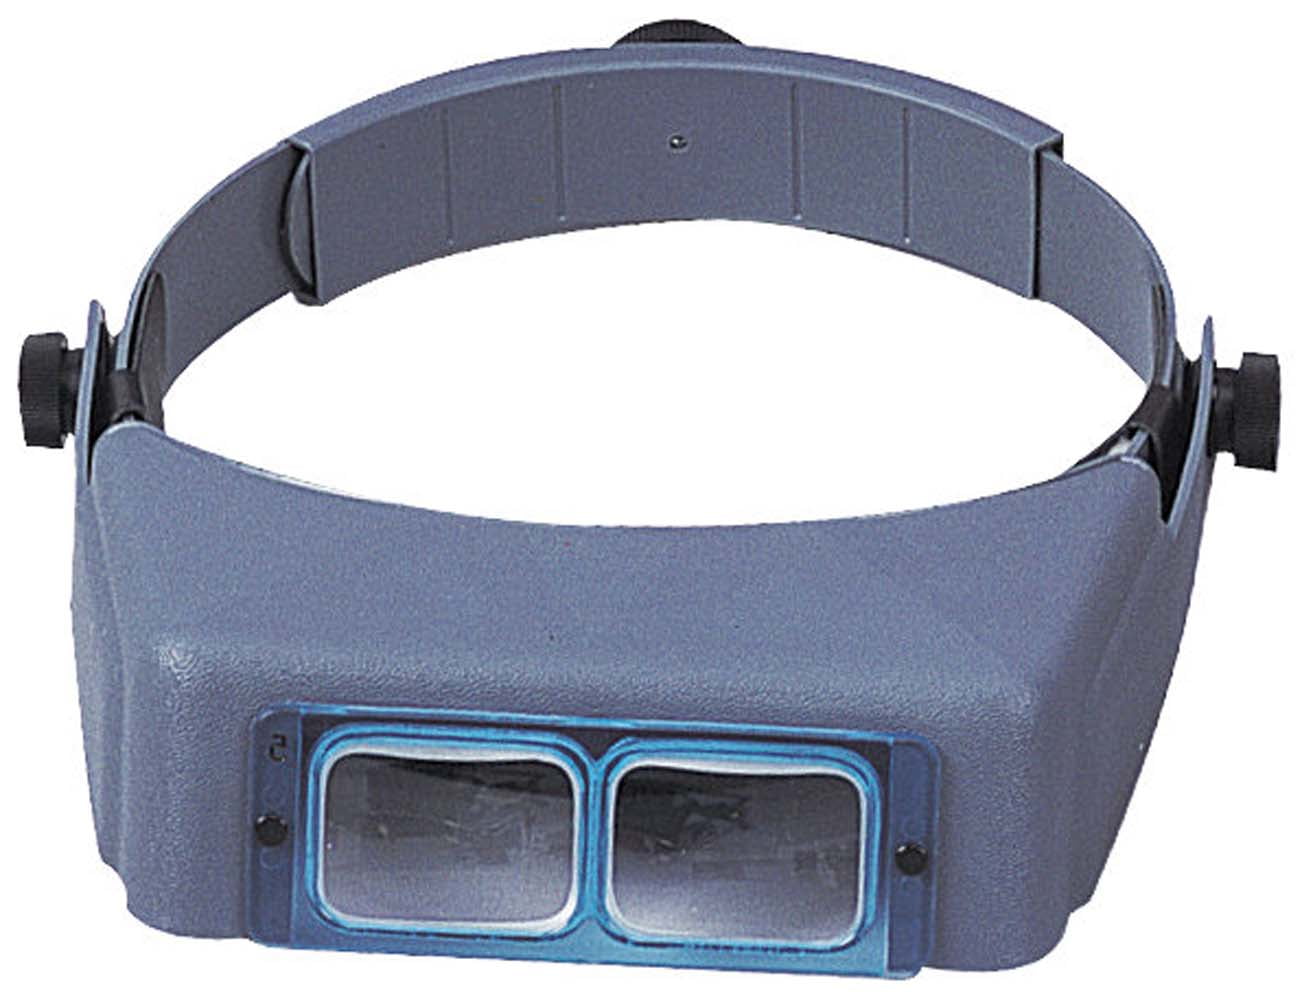 Donegan DA-3 Optivisor Headband Magnifier